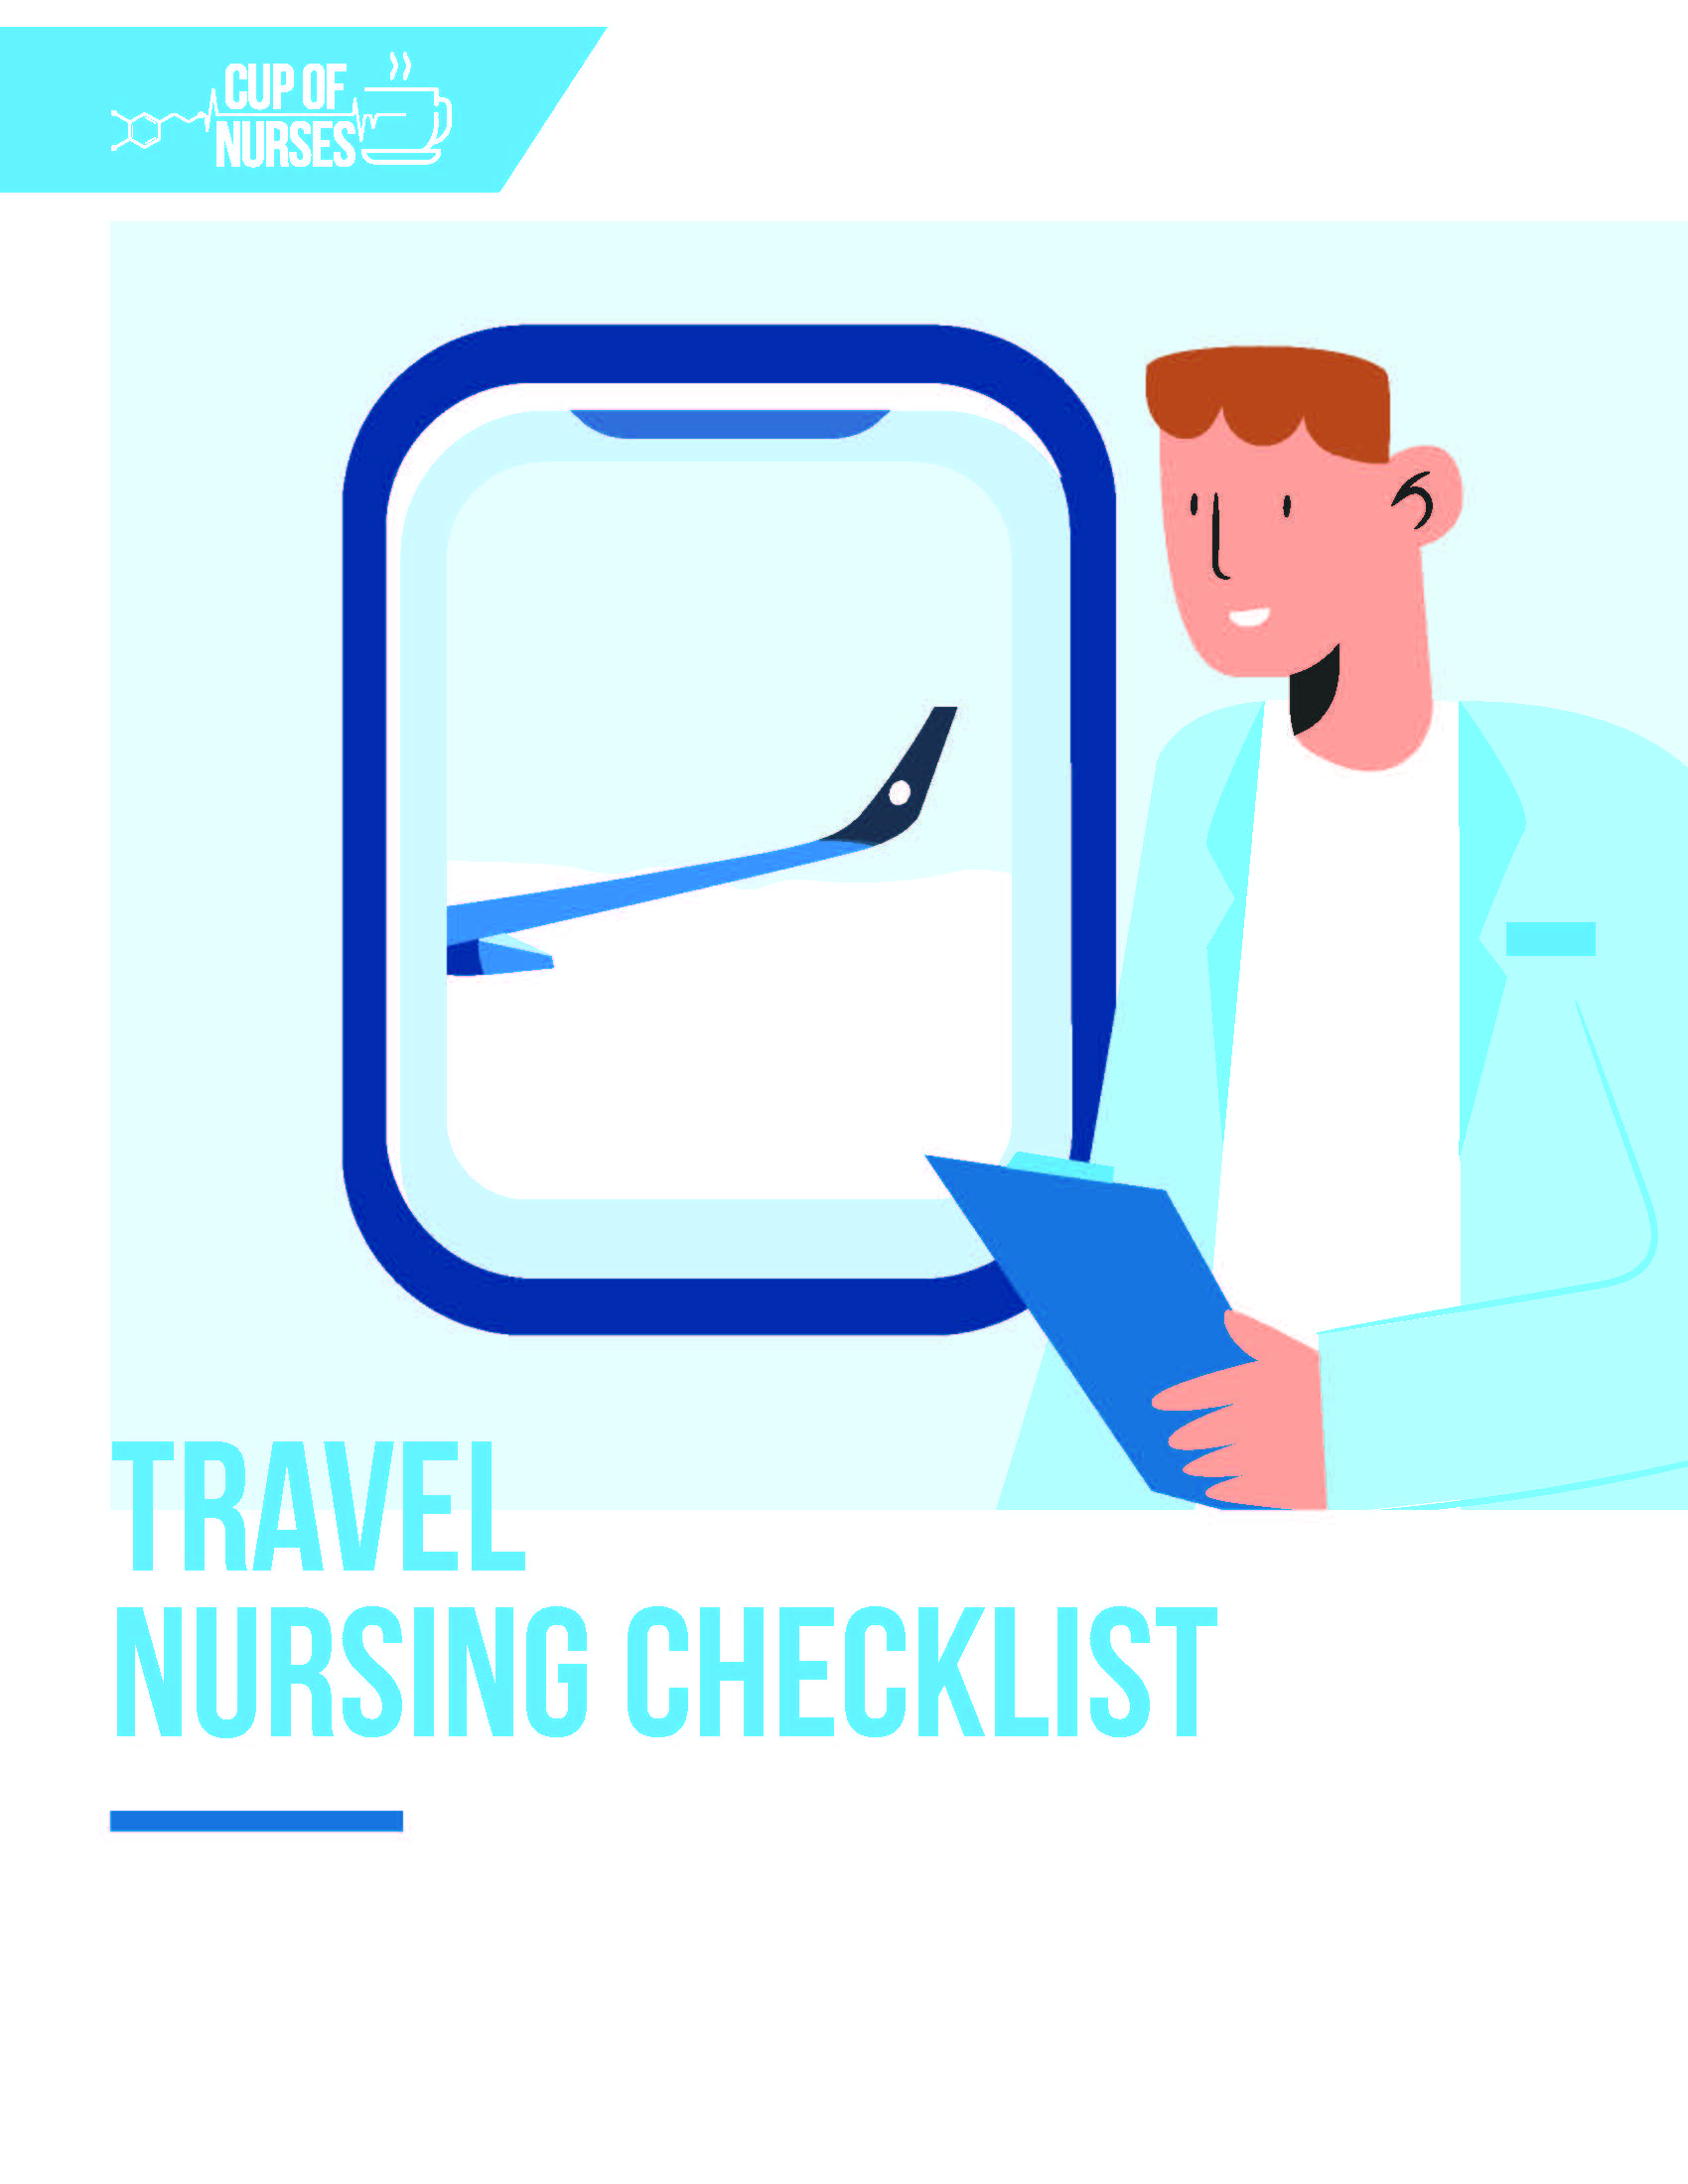 Travel nursing checklist